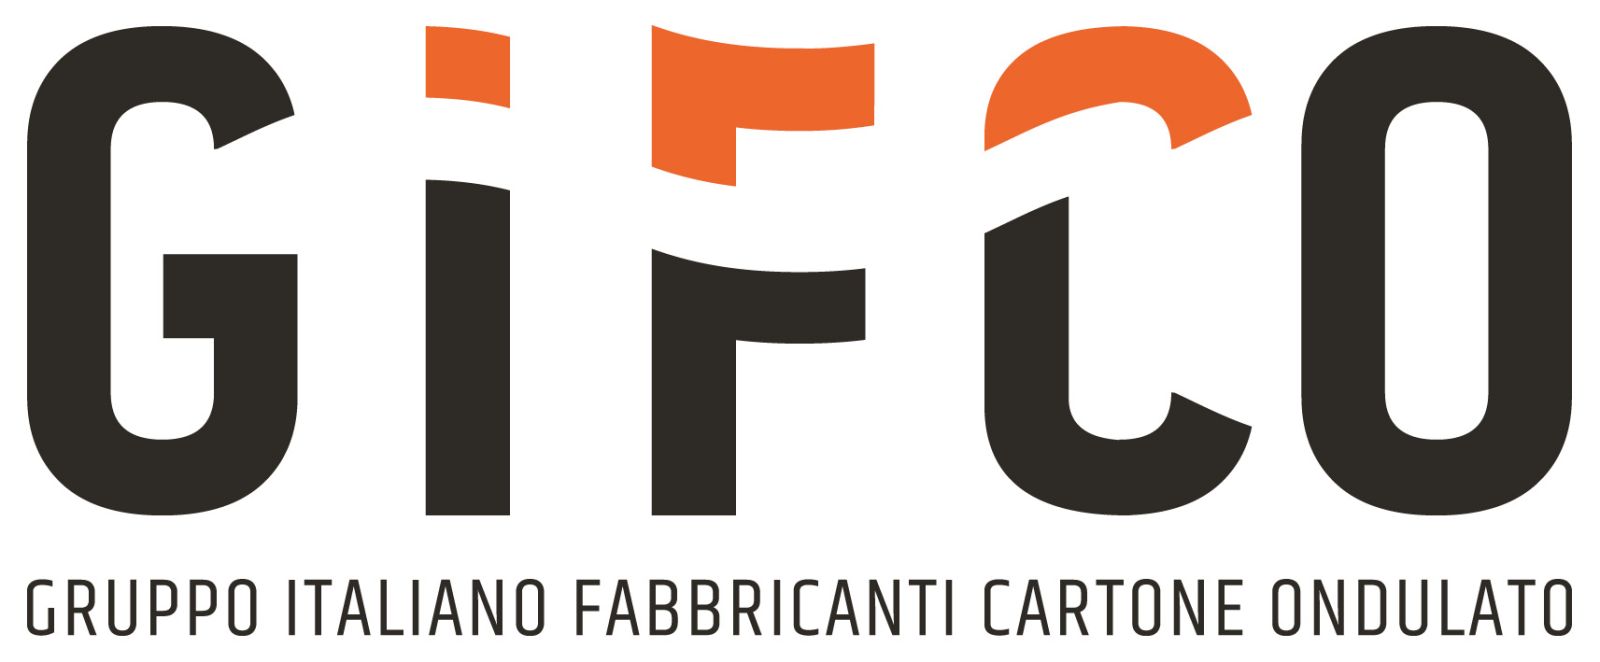 European national Corrugated board producer associations | Fefco